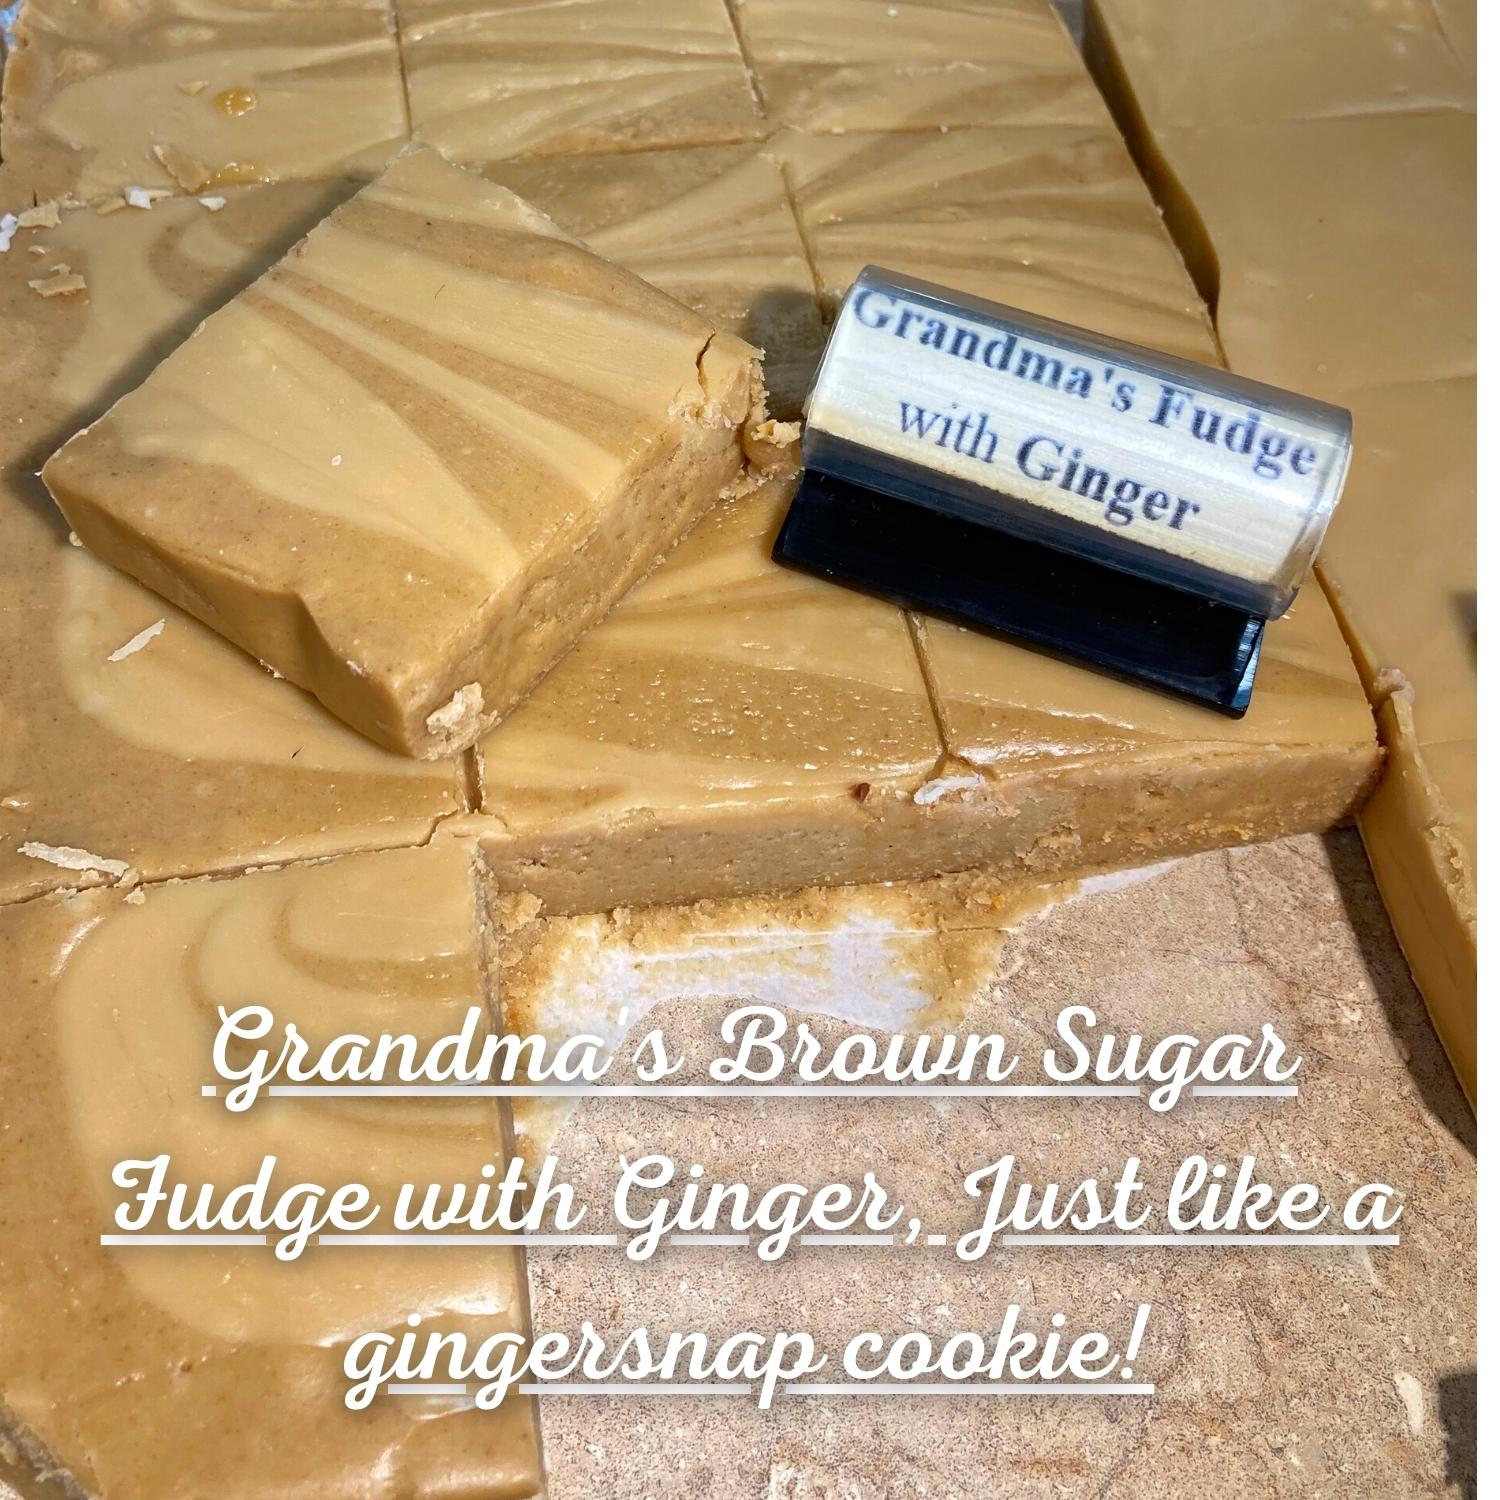 Grandma's Brown Sugar Fudge with Ginger, Just like a gingersnap cookie!